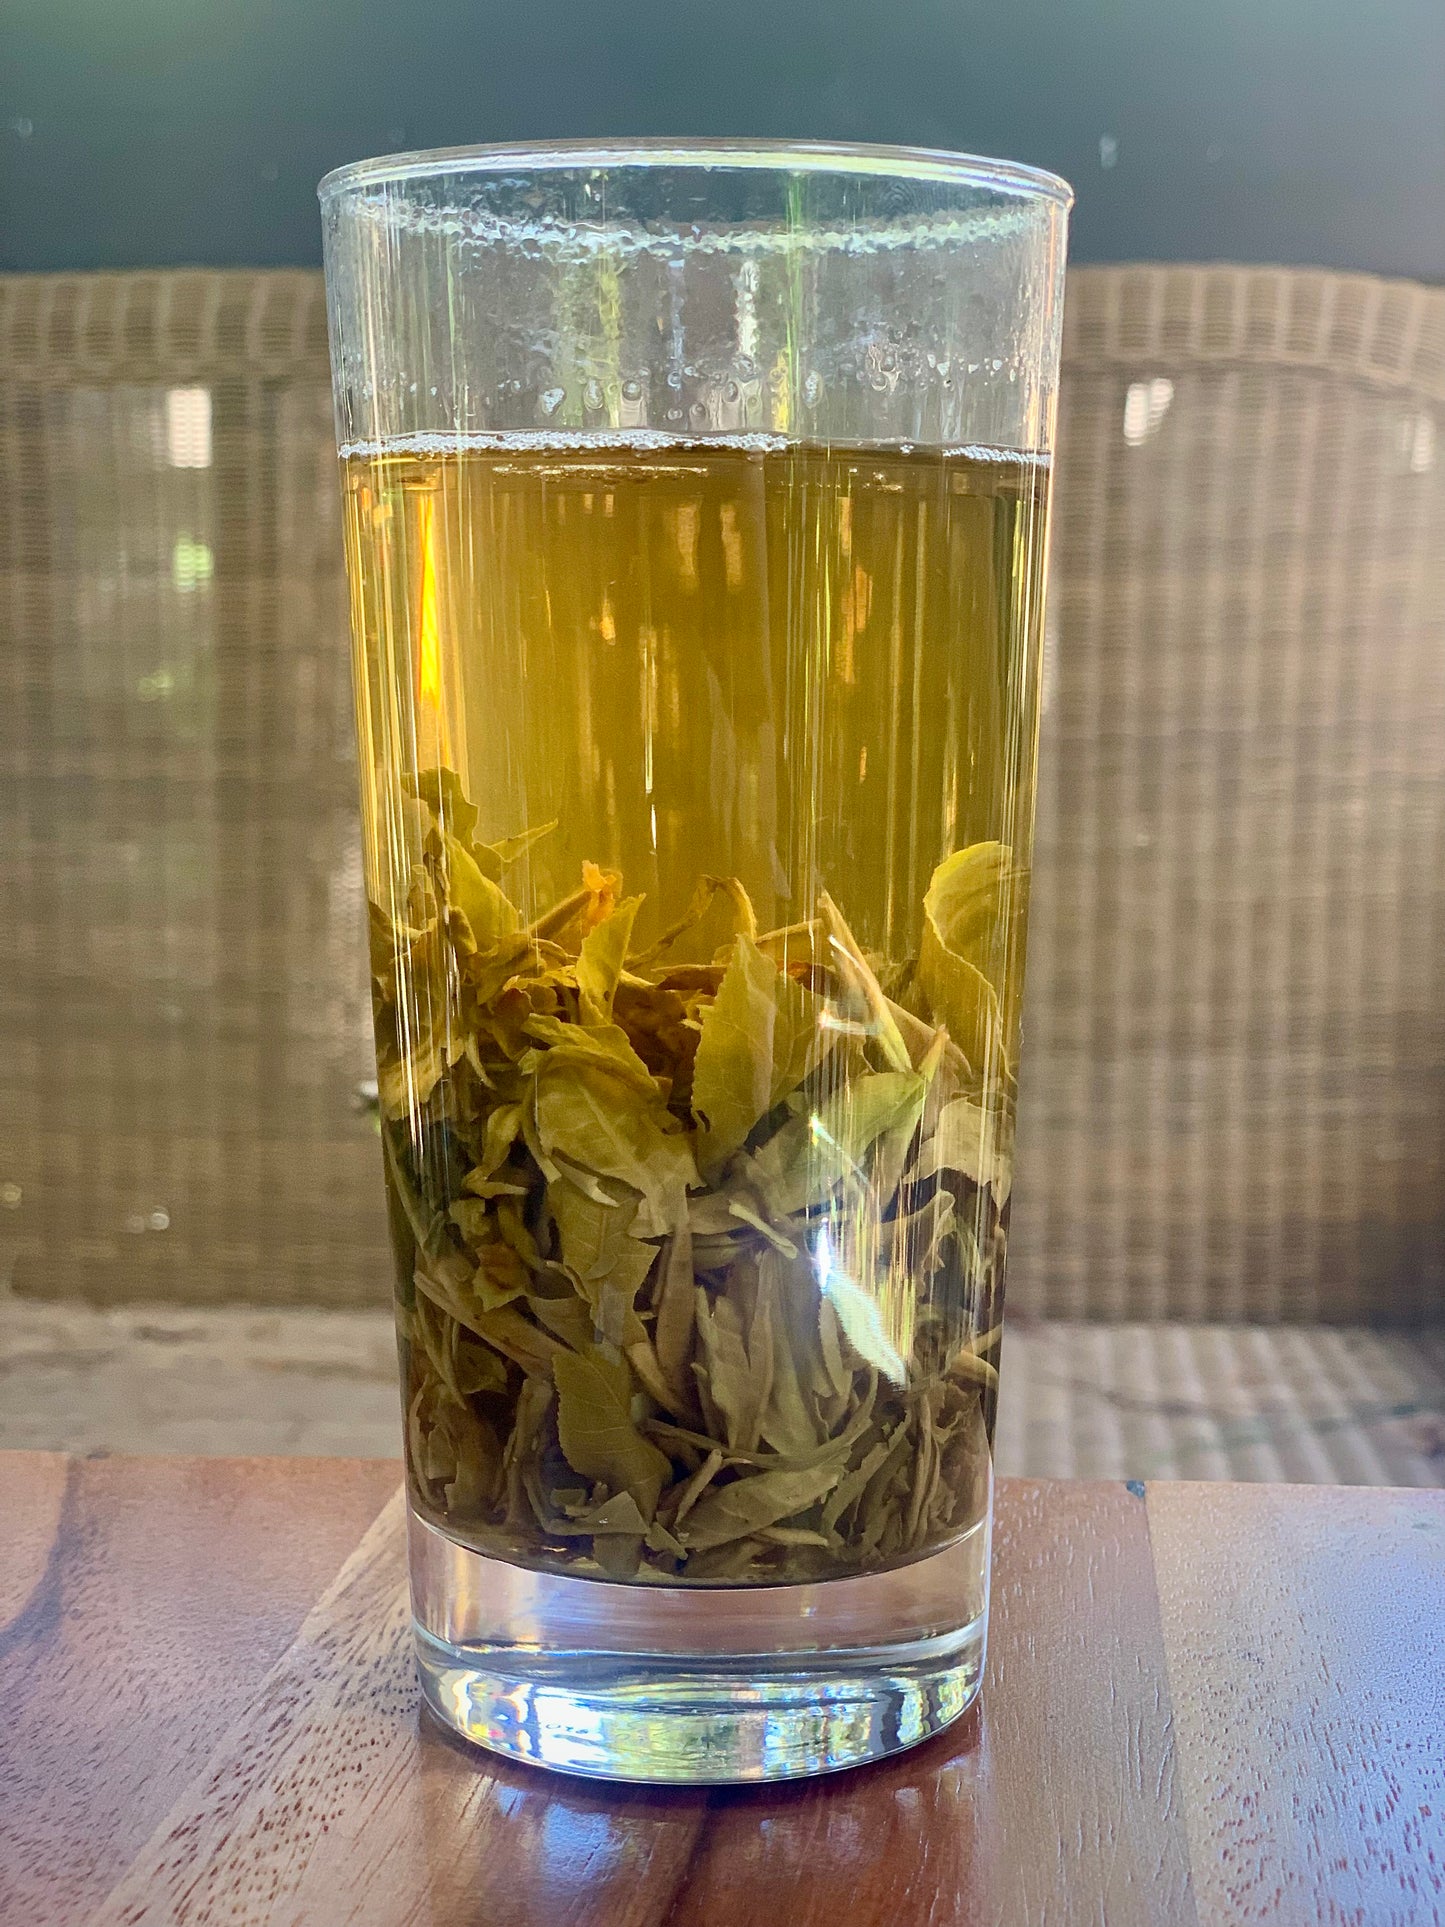 Dragon Pearls Jasmine Premium Green Tea